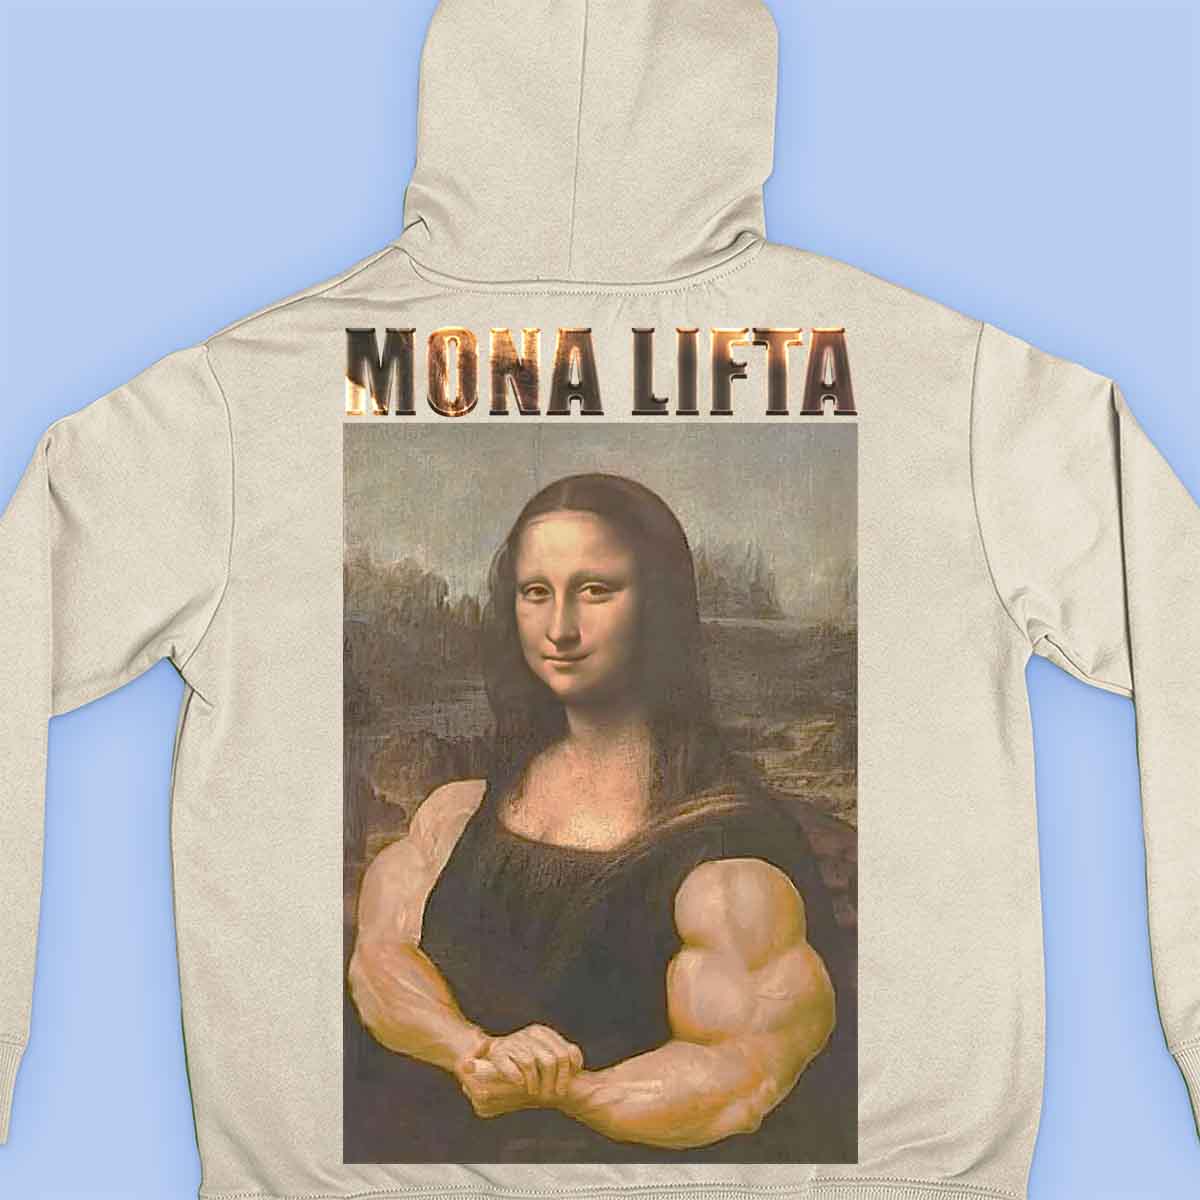 Mona Lifta - Premium Hoodie Unisex Backprint